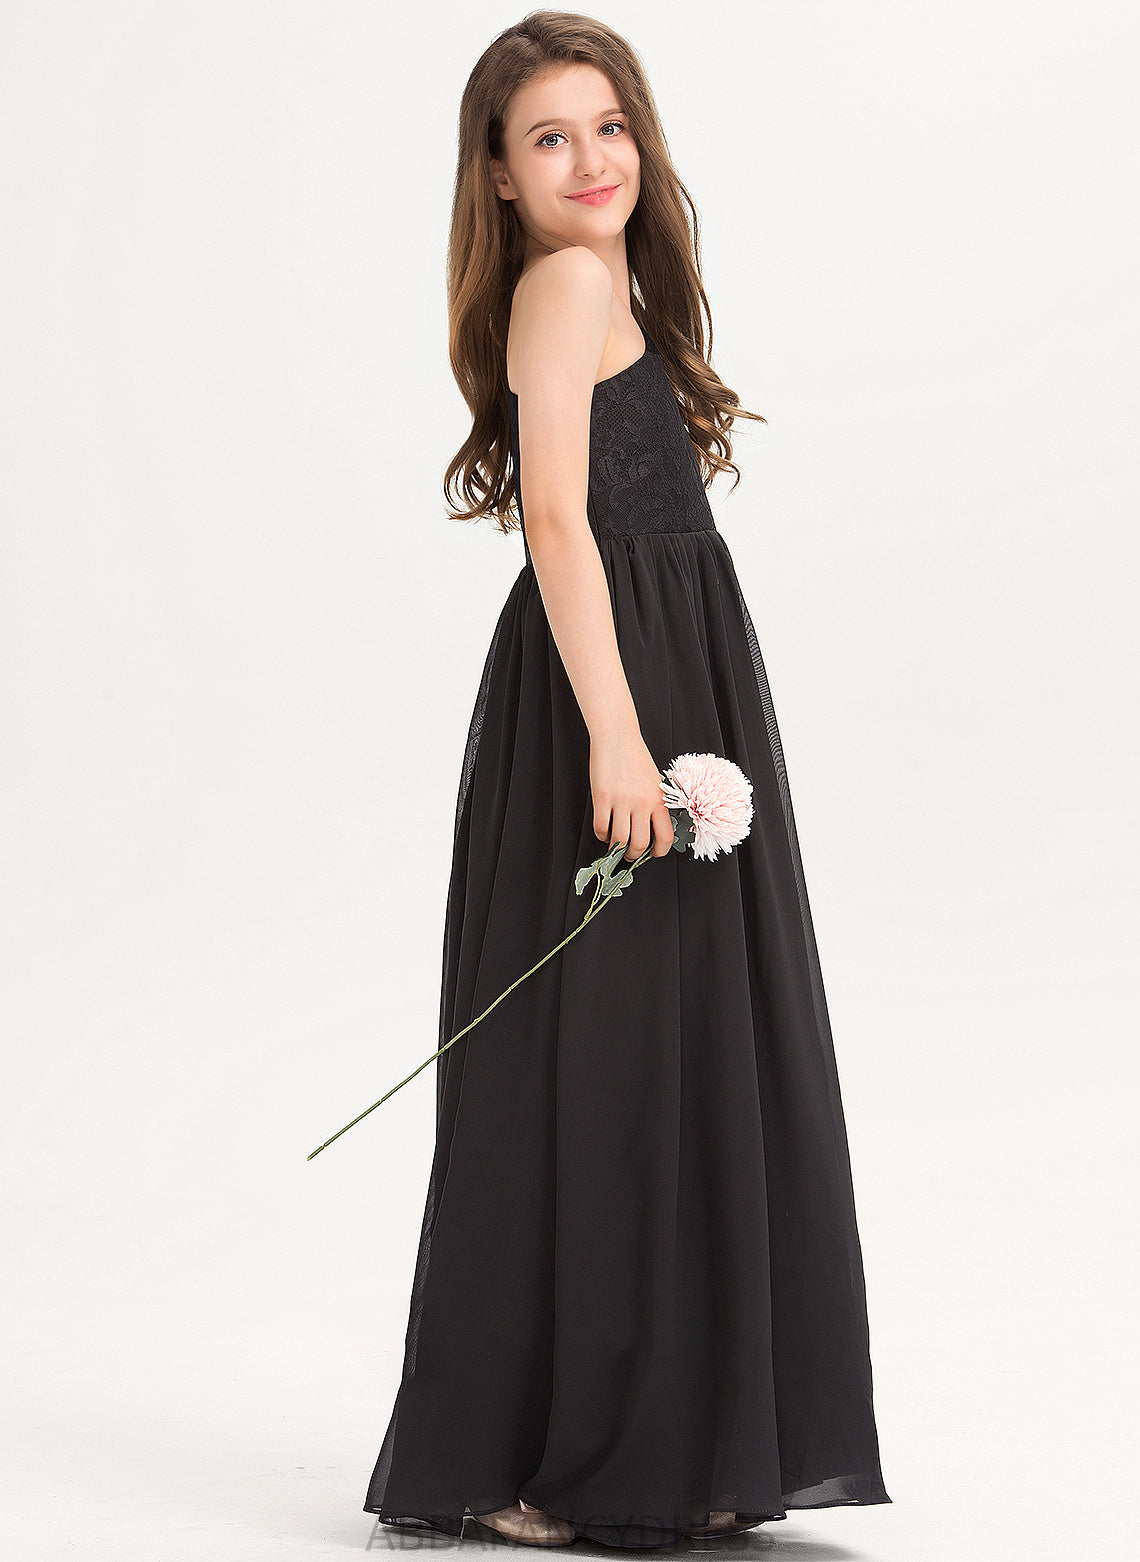 One-Shoulder Chiffon Lace Yuliana Floor-Length A-Line Junior Bridesmaid Dresses